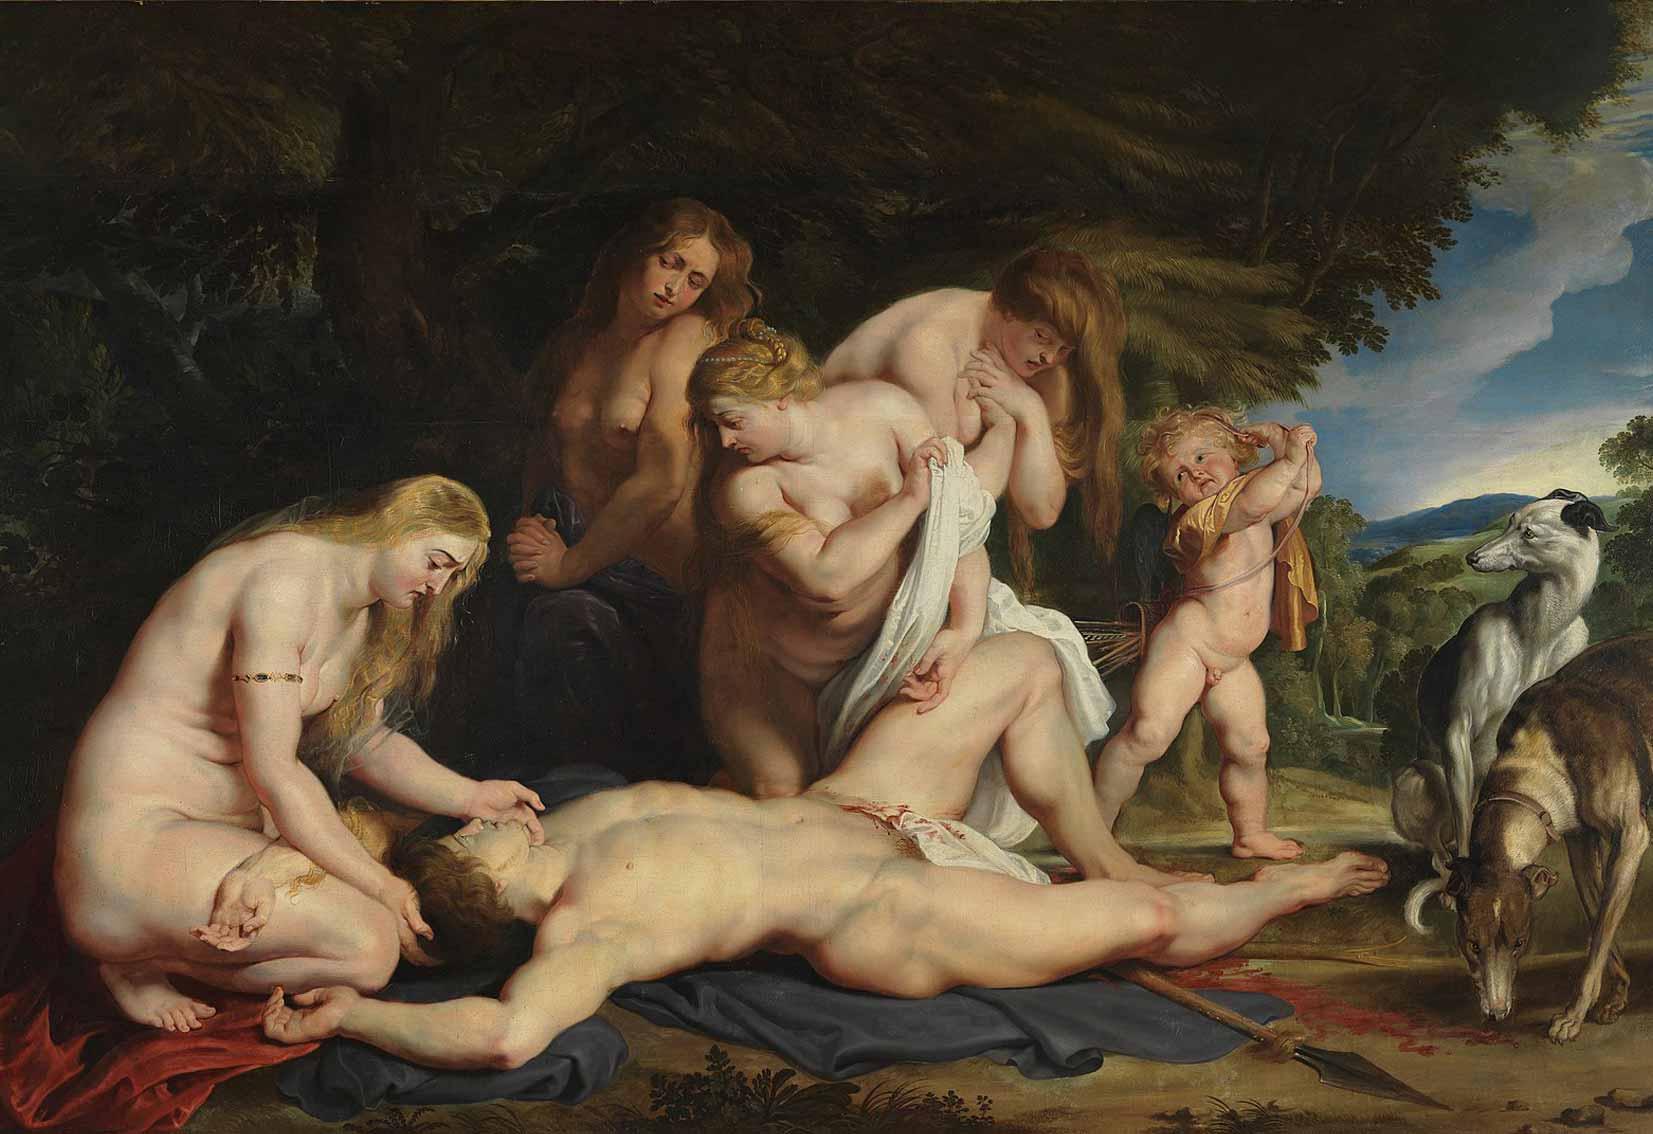 Peter Paul Rubens, The Death of Adonis, c. 1614.